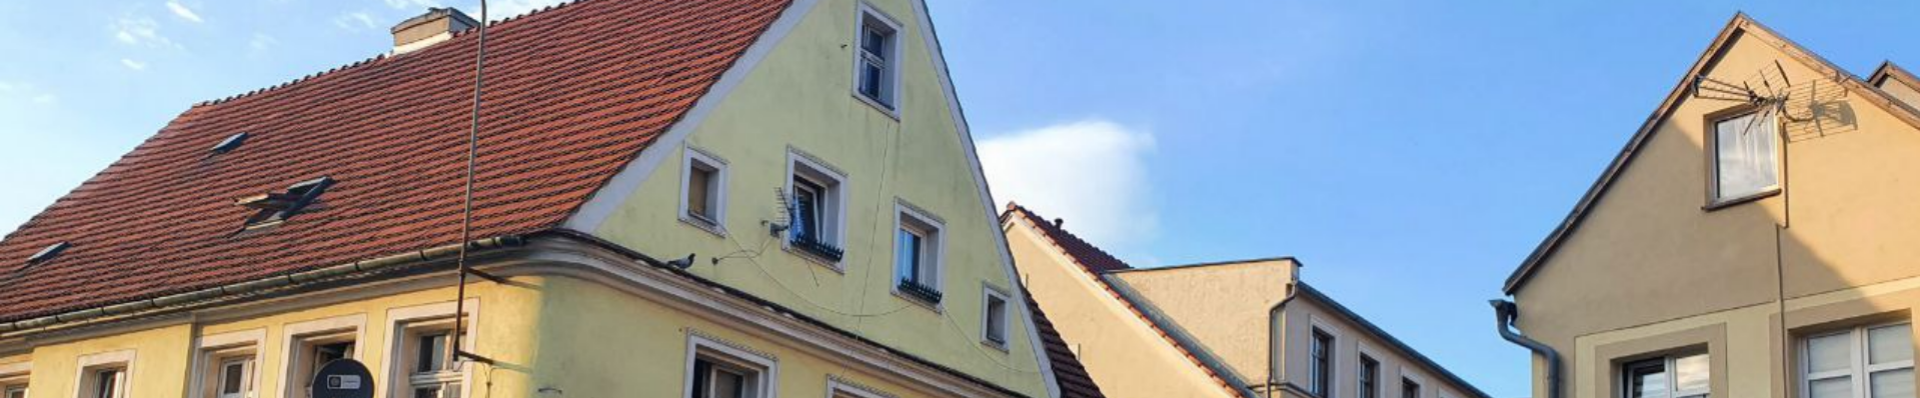 Tarifana­lyse: Wohn­ge­bäu­de­ver­si­che­rung der Allianz (Stand 10.2019 bzw. 07.2020)